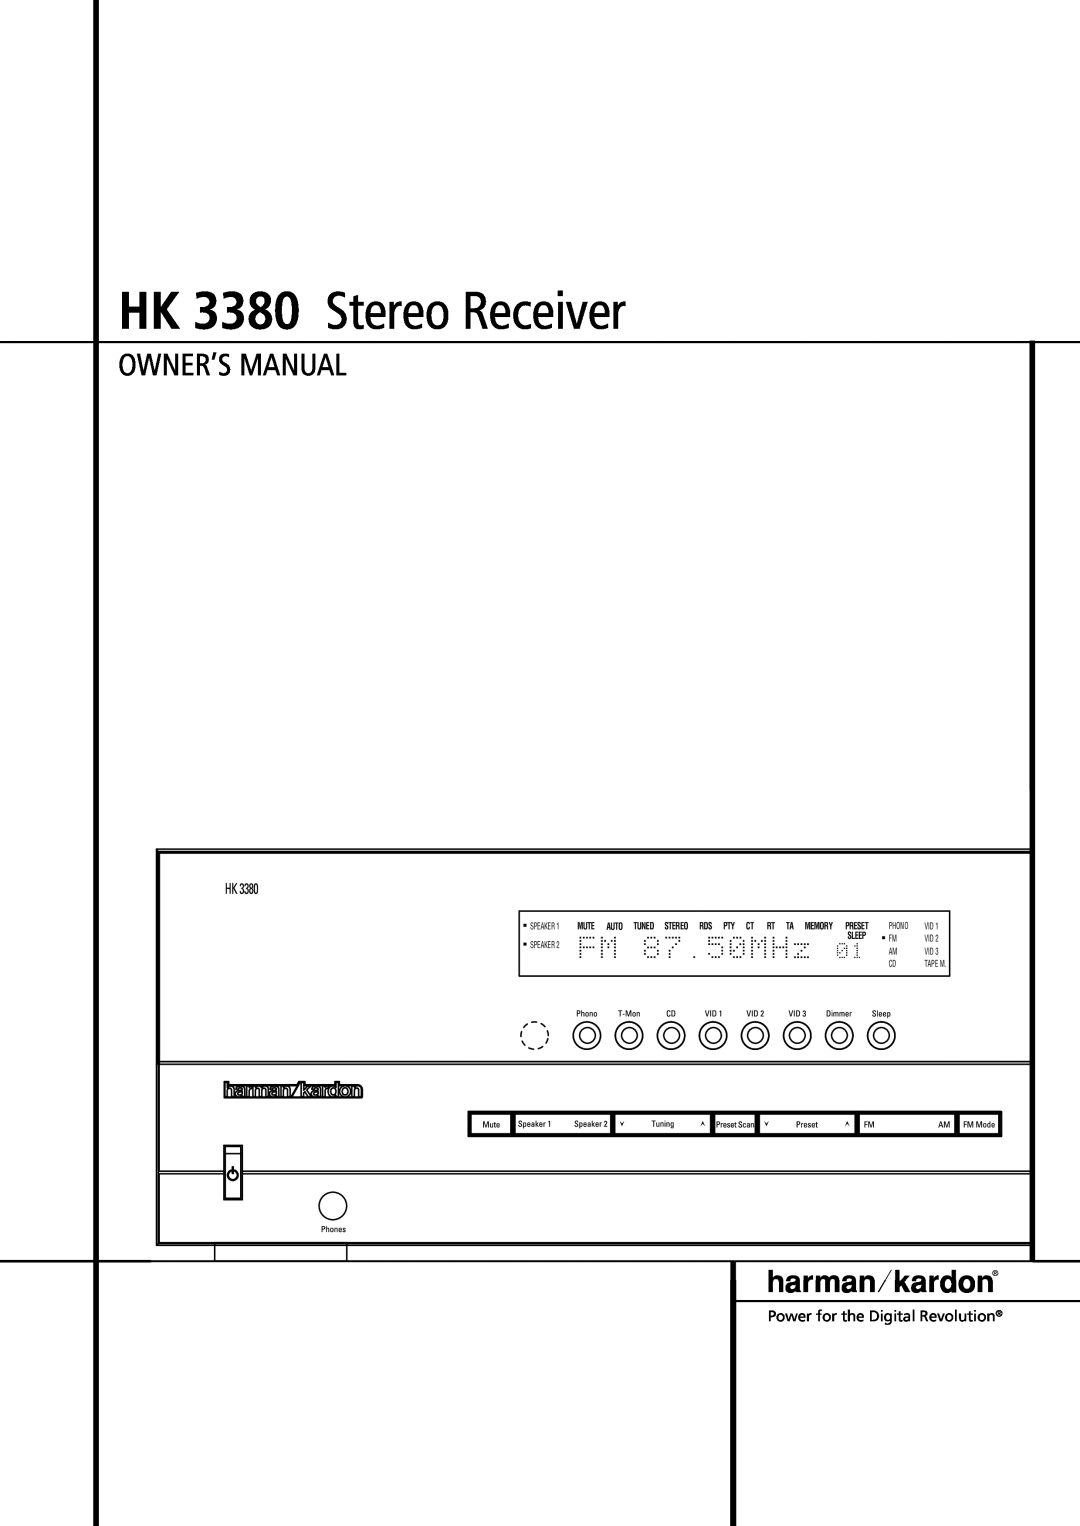 Harman-Kardon owner manual HK 3380 Stereo Receiver, Phono, Speaker, Sleep, Tape M 